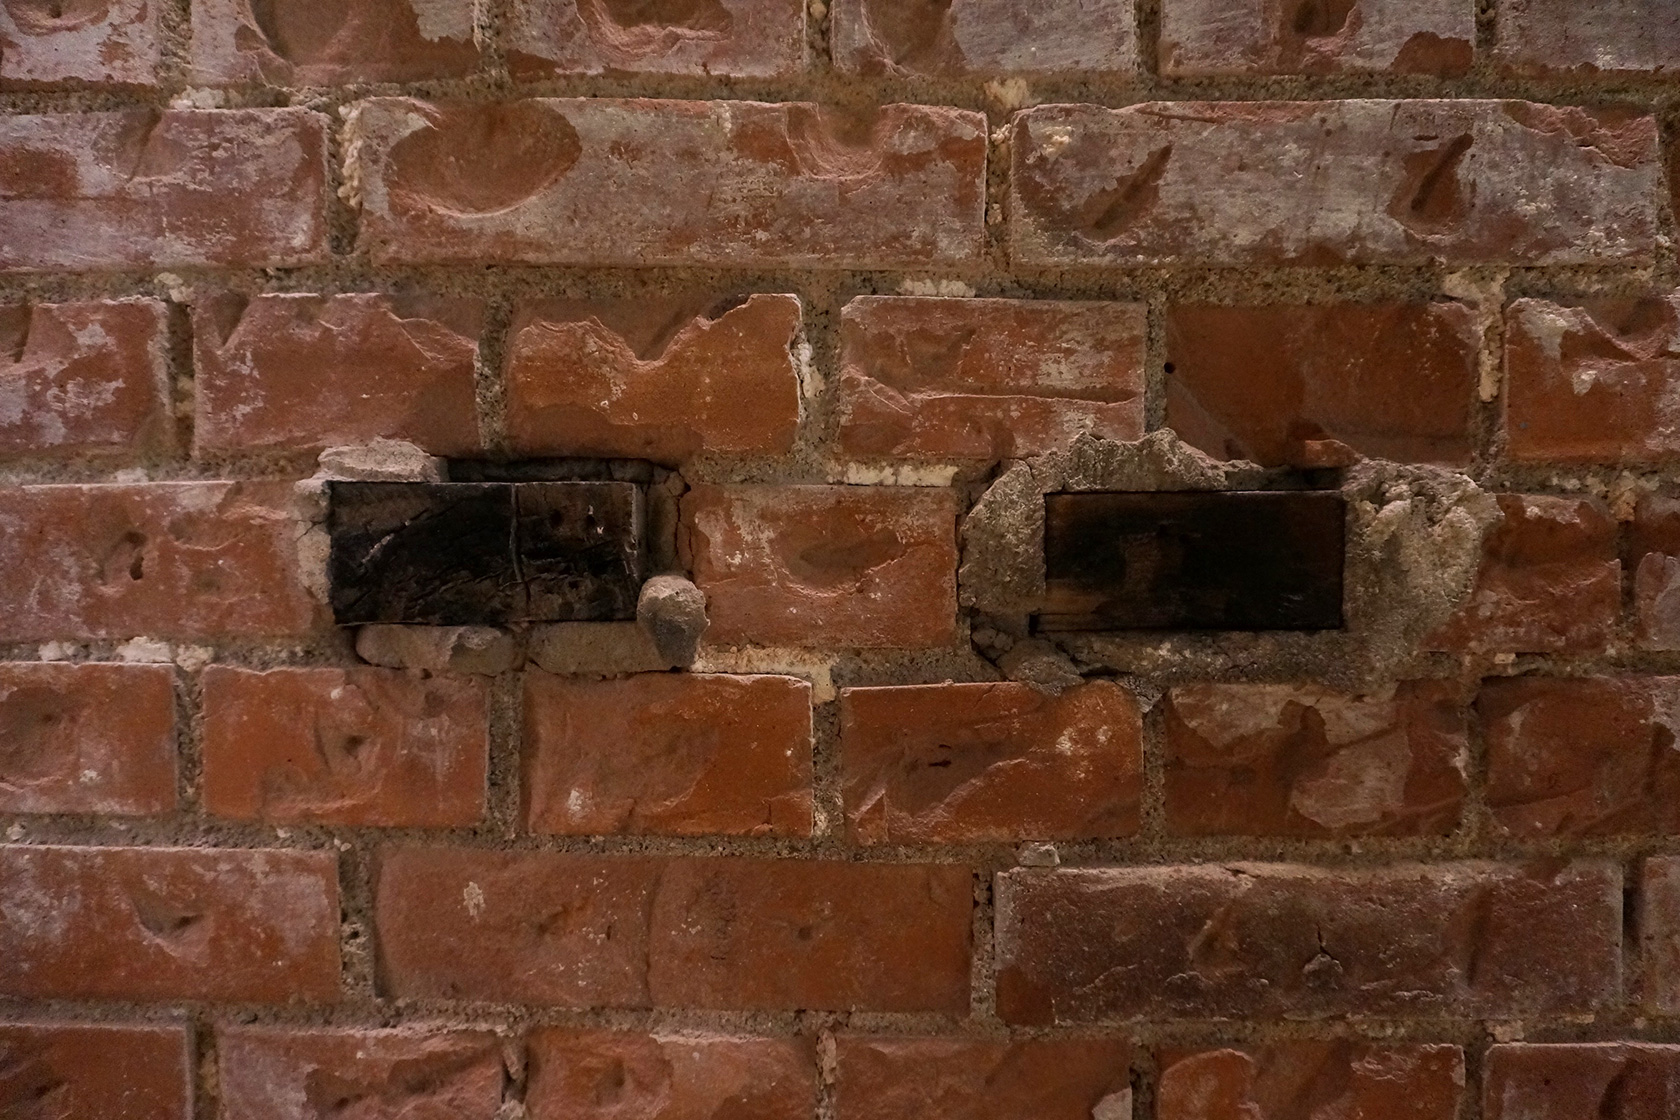 Carbonized wooden bricks